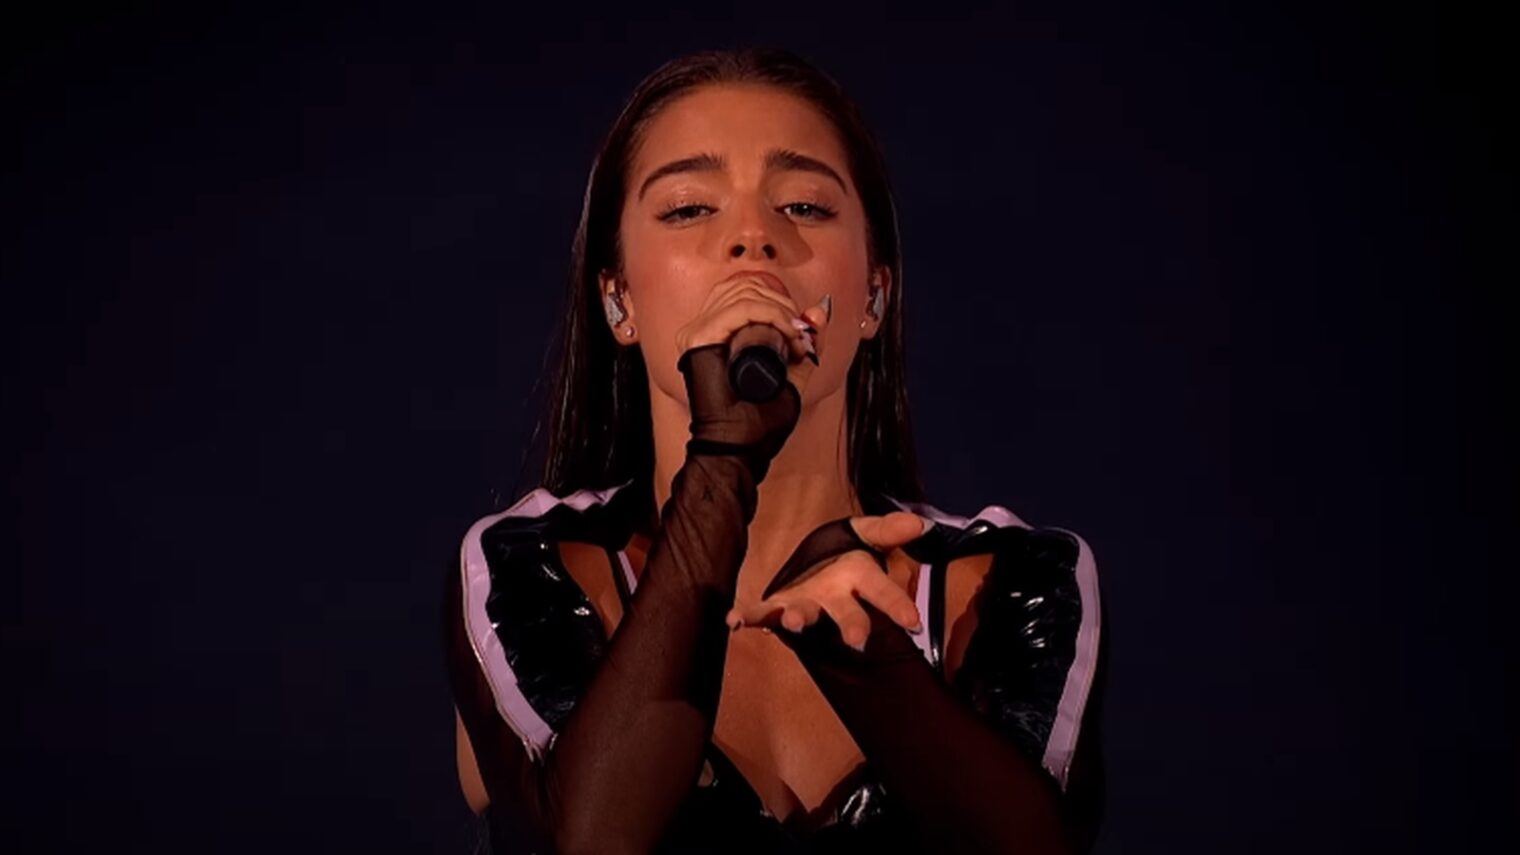 Noa Kirel performing “Unicorn.” Screenshot from Eurovison official video